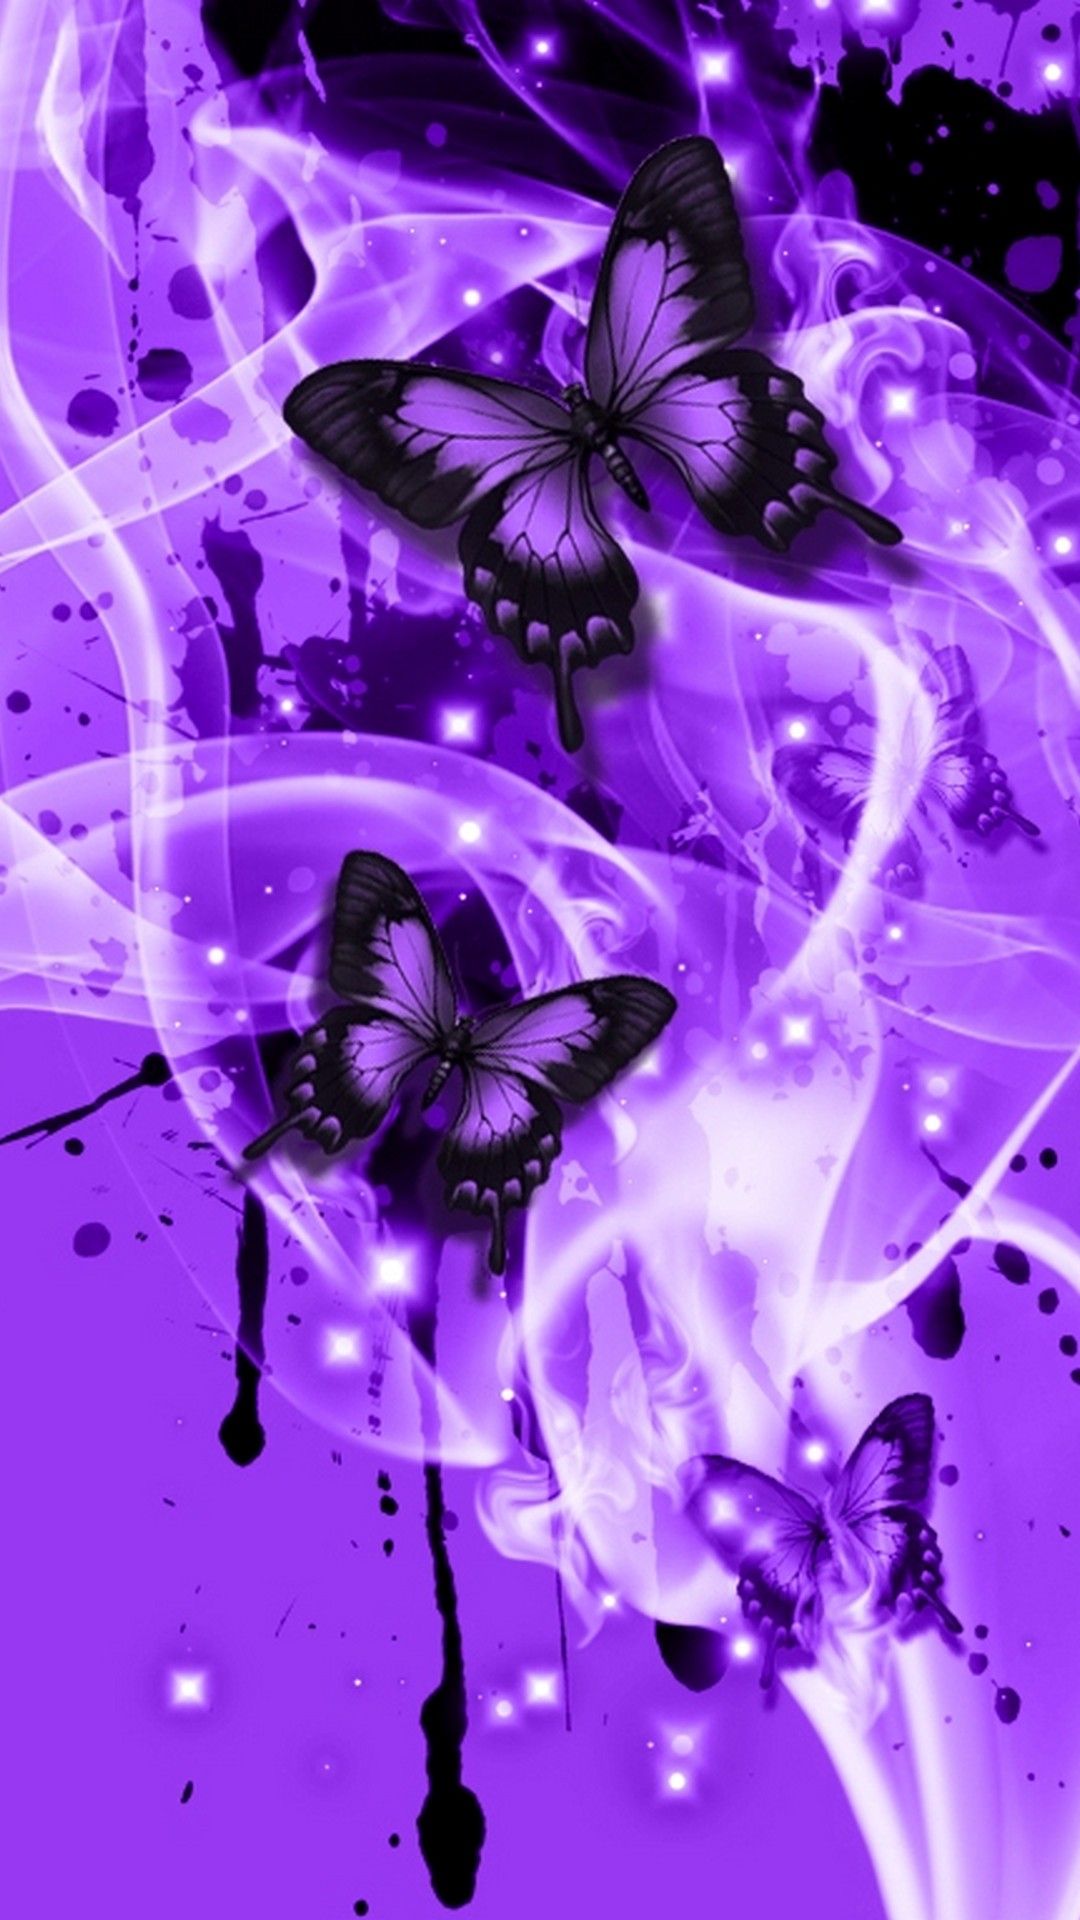 1080x1920 Iphone 8 Wallpaper Cute Butterfly Resolution Purple Wallpaper Iphone Butterfly 1080x1920 Download Hd Wallpaper